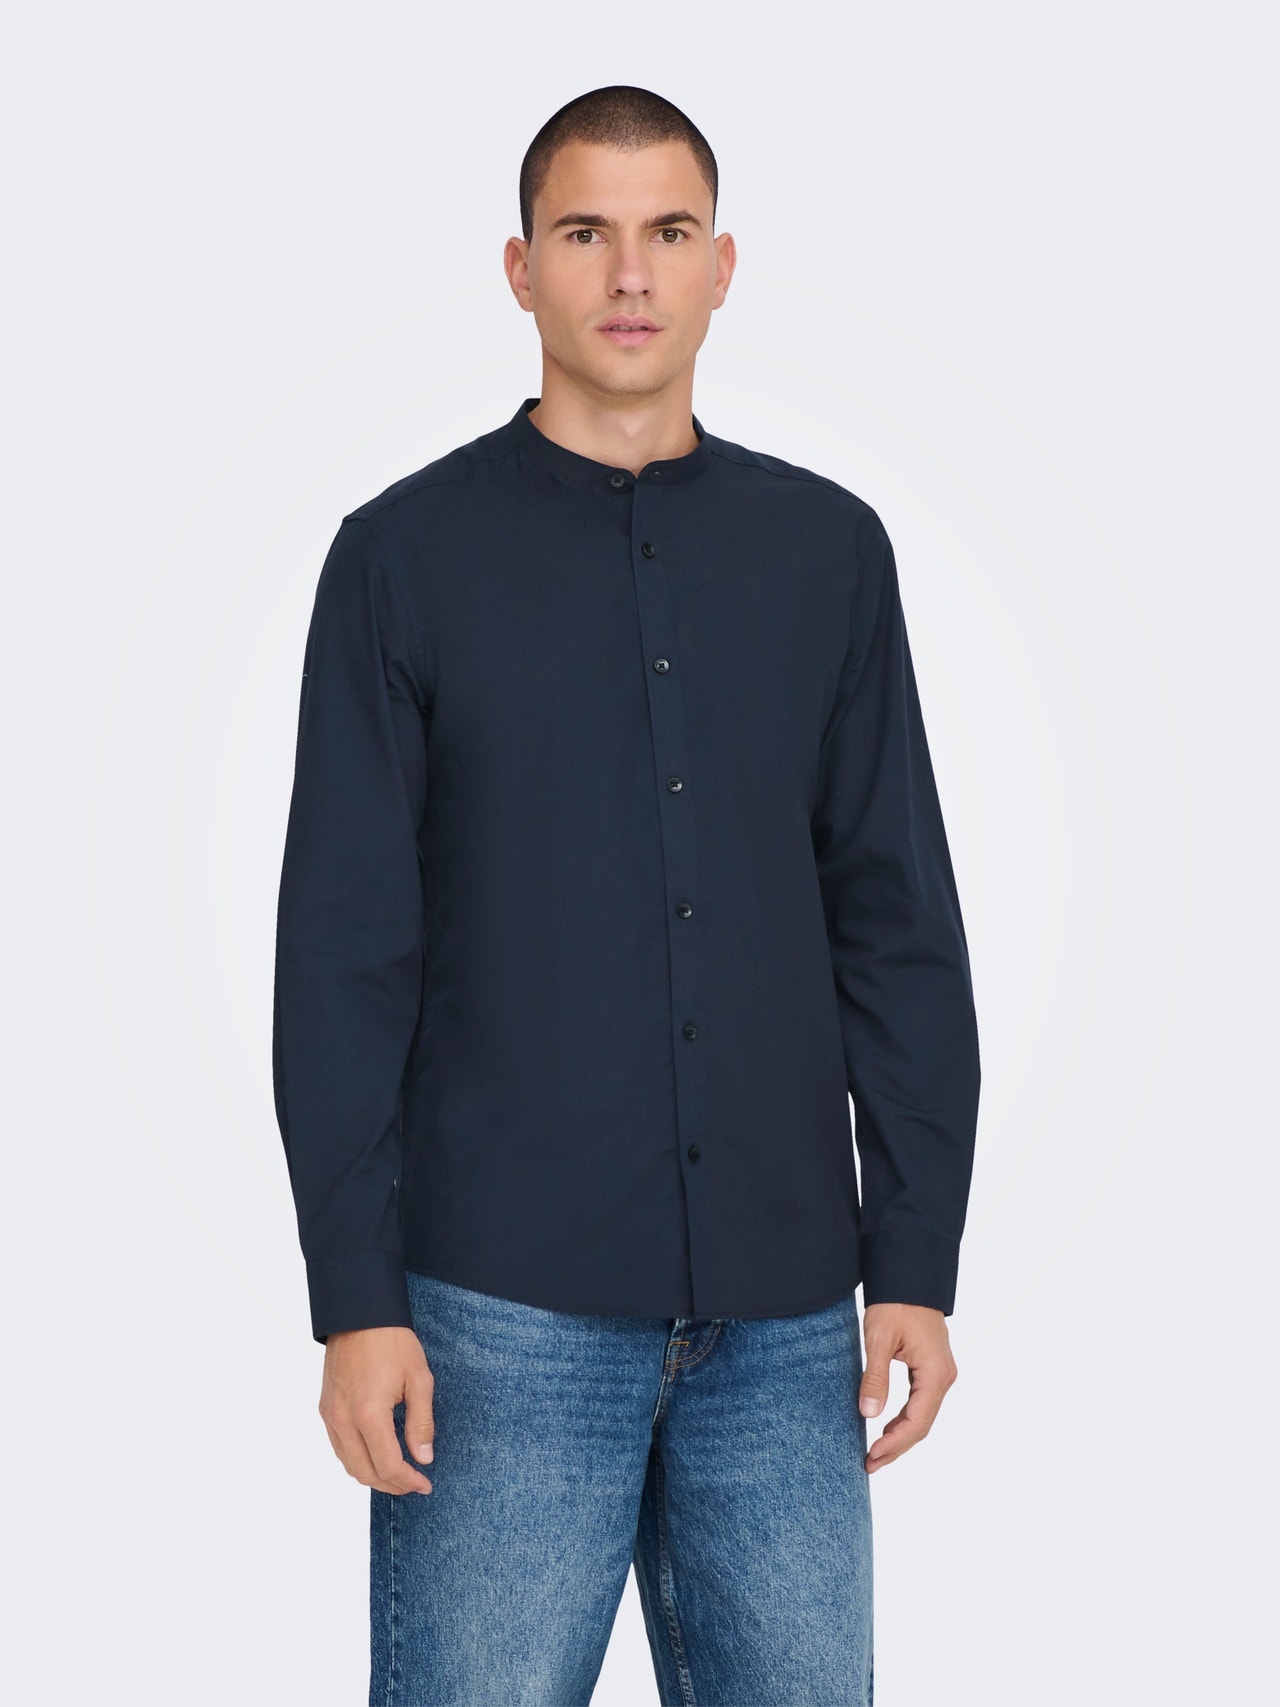 ONLY & SONS Slim Fit China Collar Shirt -Dark Navy - 22024167